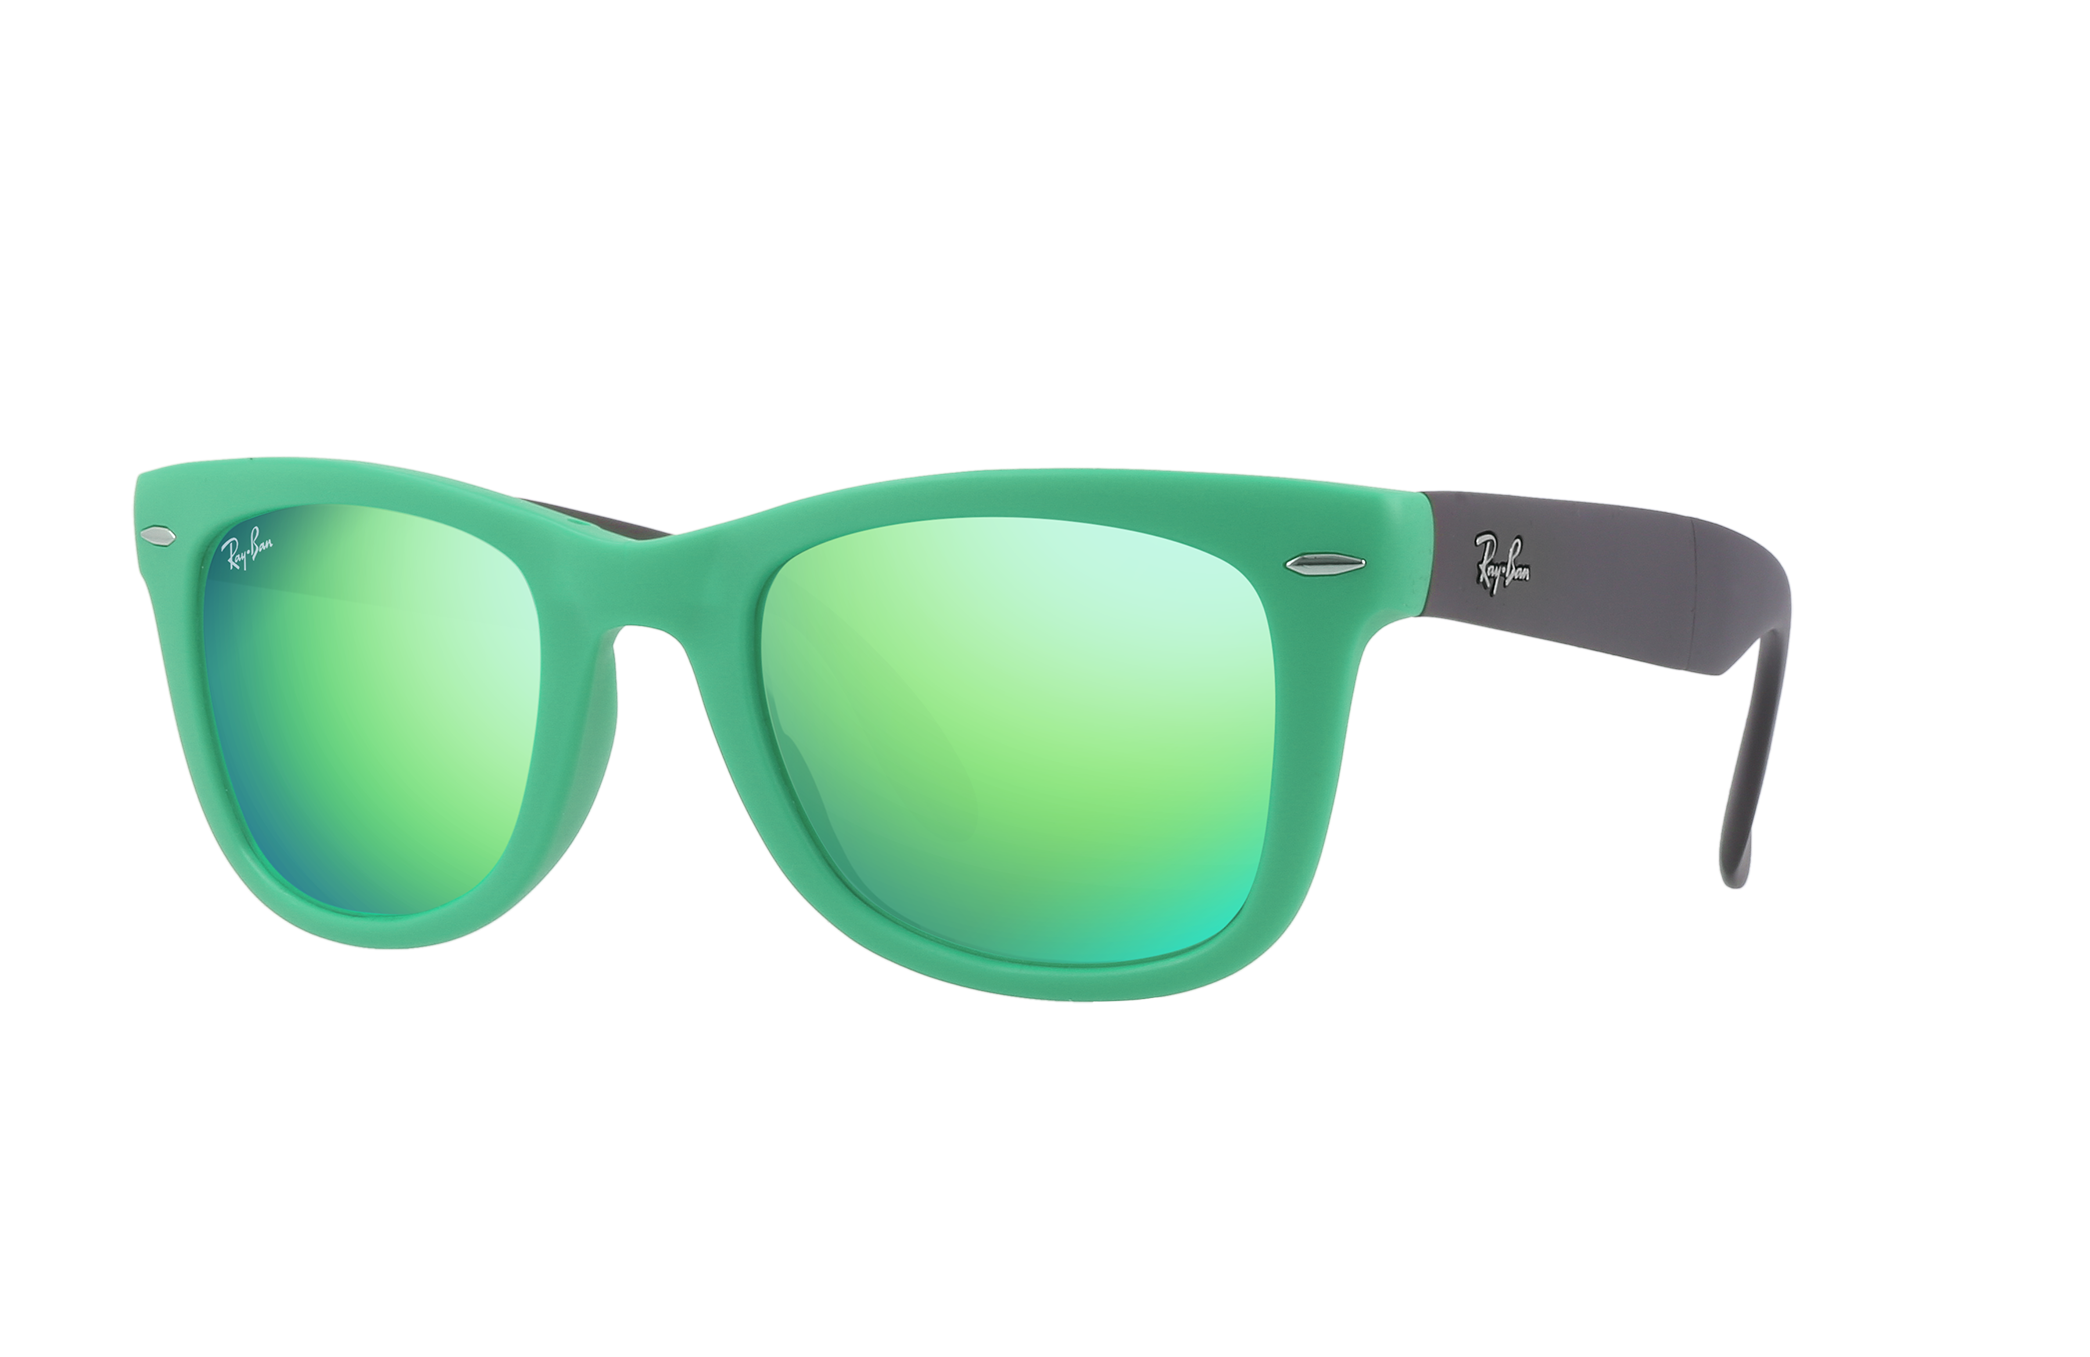 Wayfarer Folding Flash Lenses Sunglasses in Green and Green | Ray-Ban®